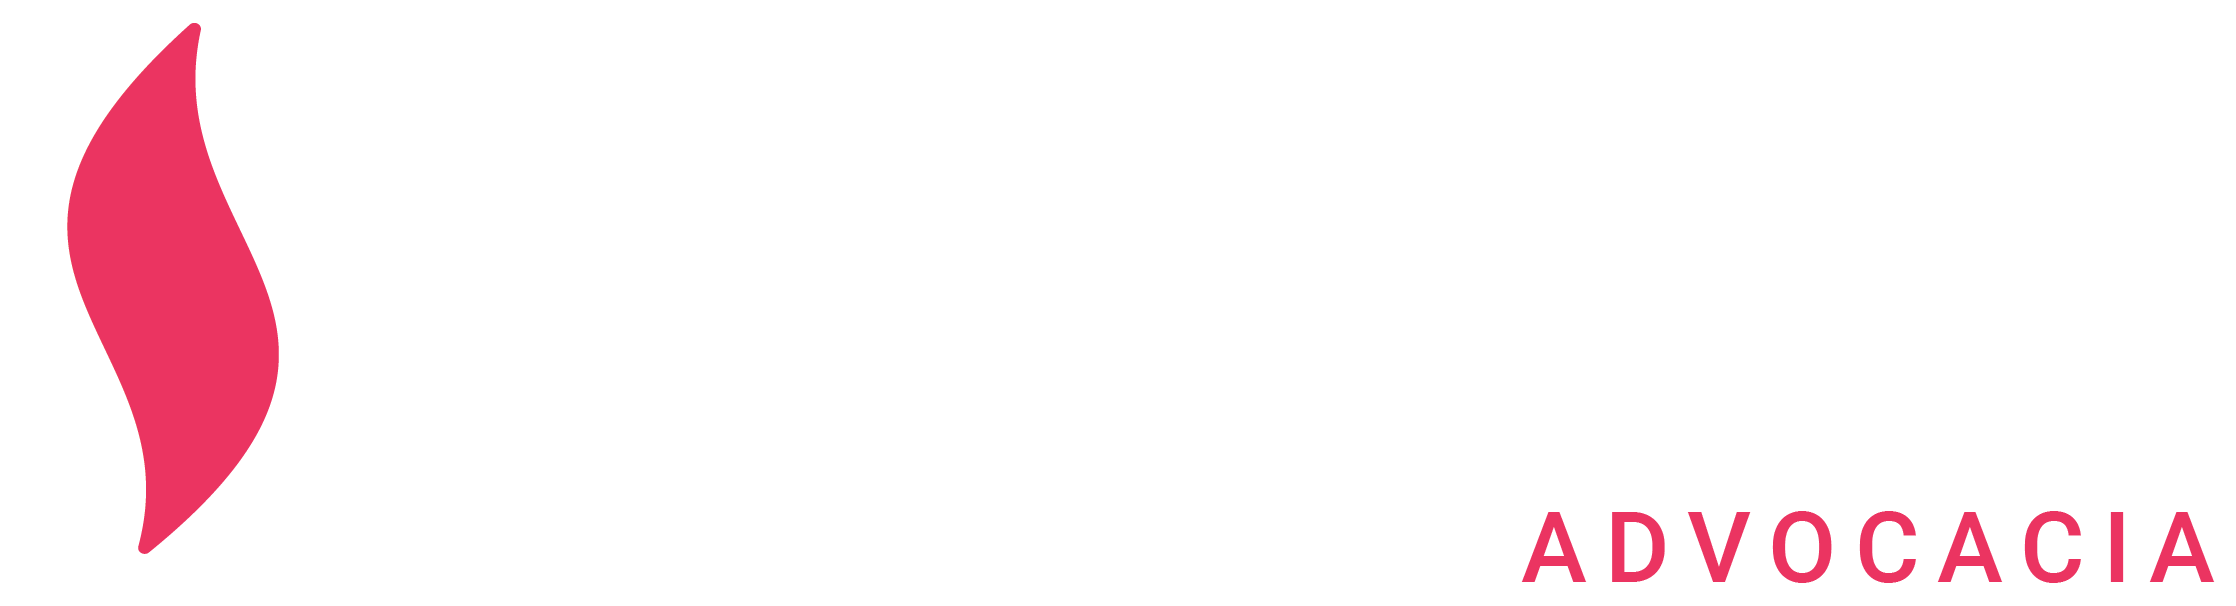 Siqueira Neto e Noronha Siqueira Advocacia